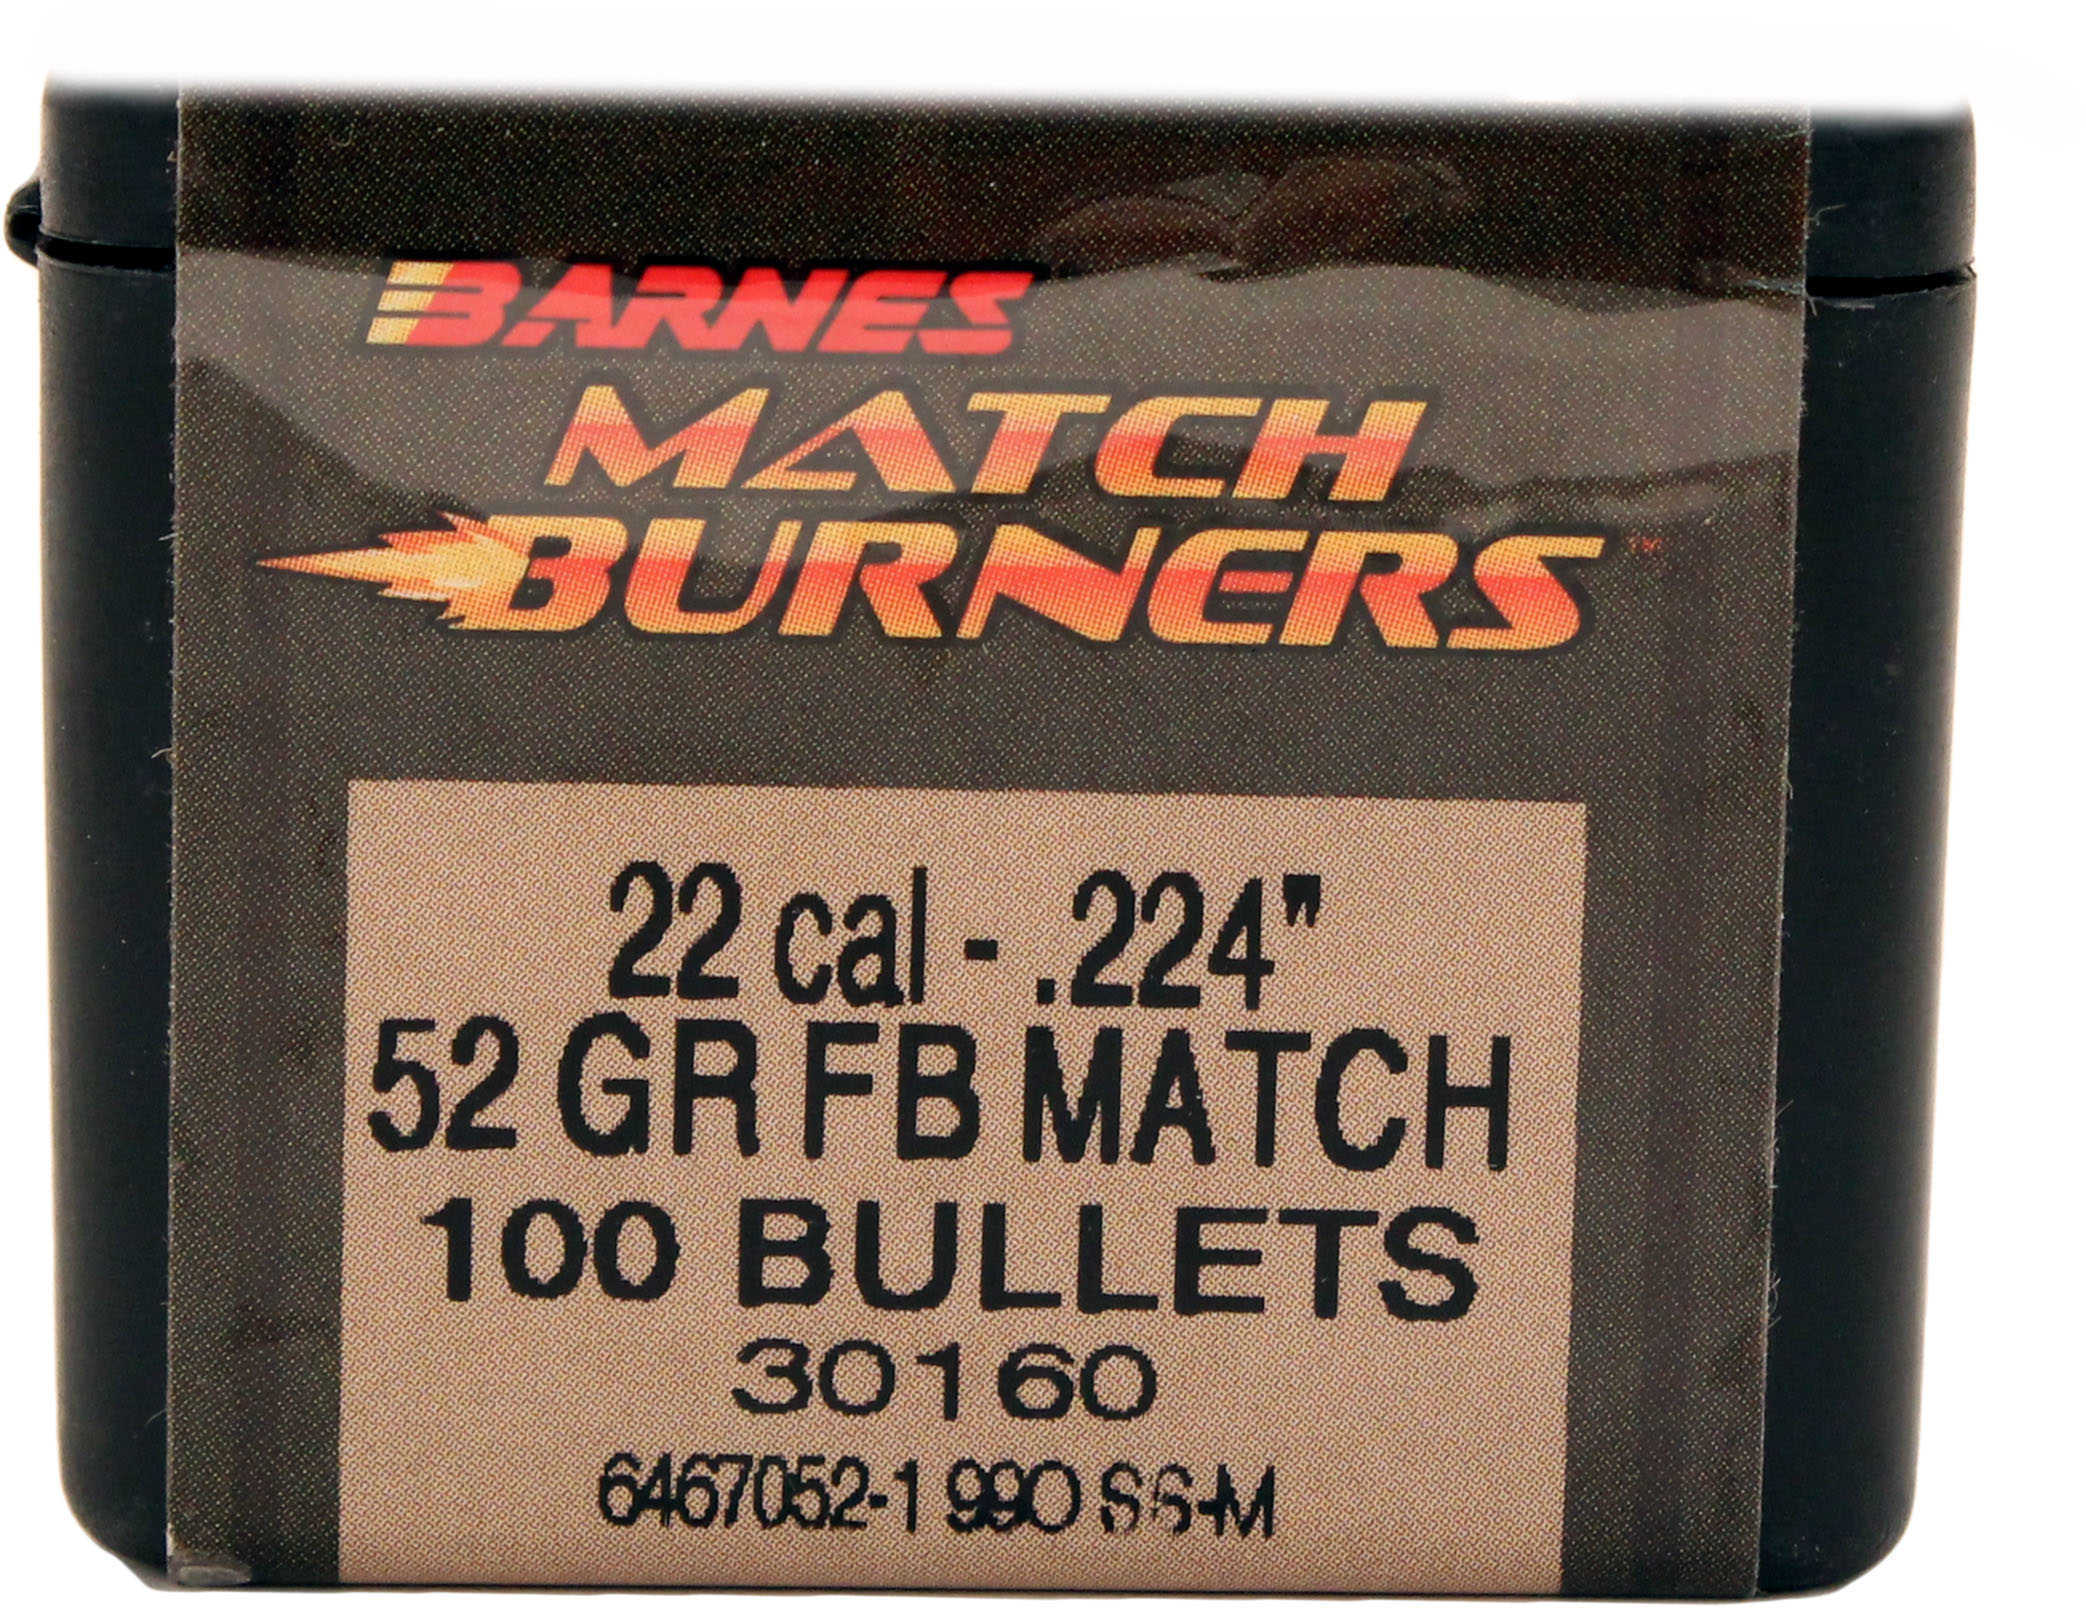 Barnes Bullets Match Burners 22 Caliber .224" 52 Grains Flat Base (Per 100) 22413